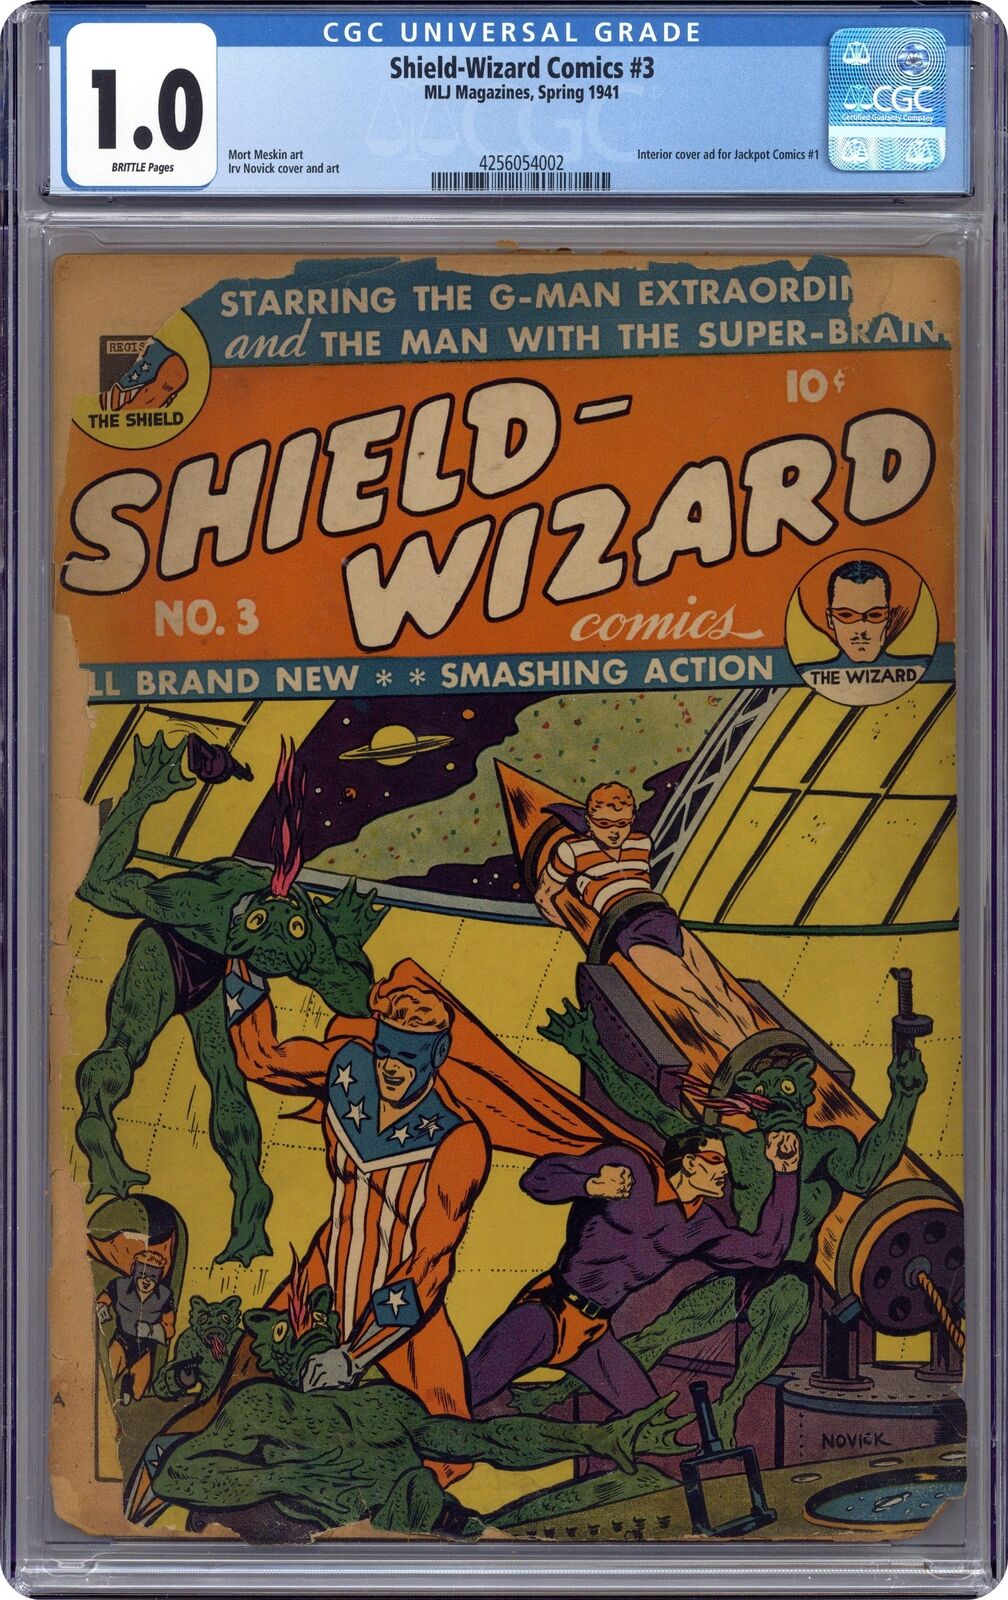 Shield-Wizard Comics #3 CGC 1.0 1941 4256054002